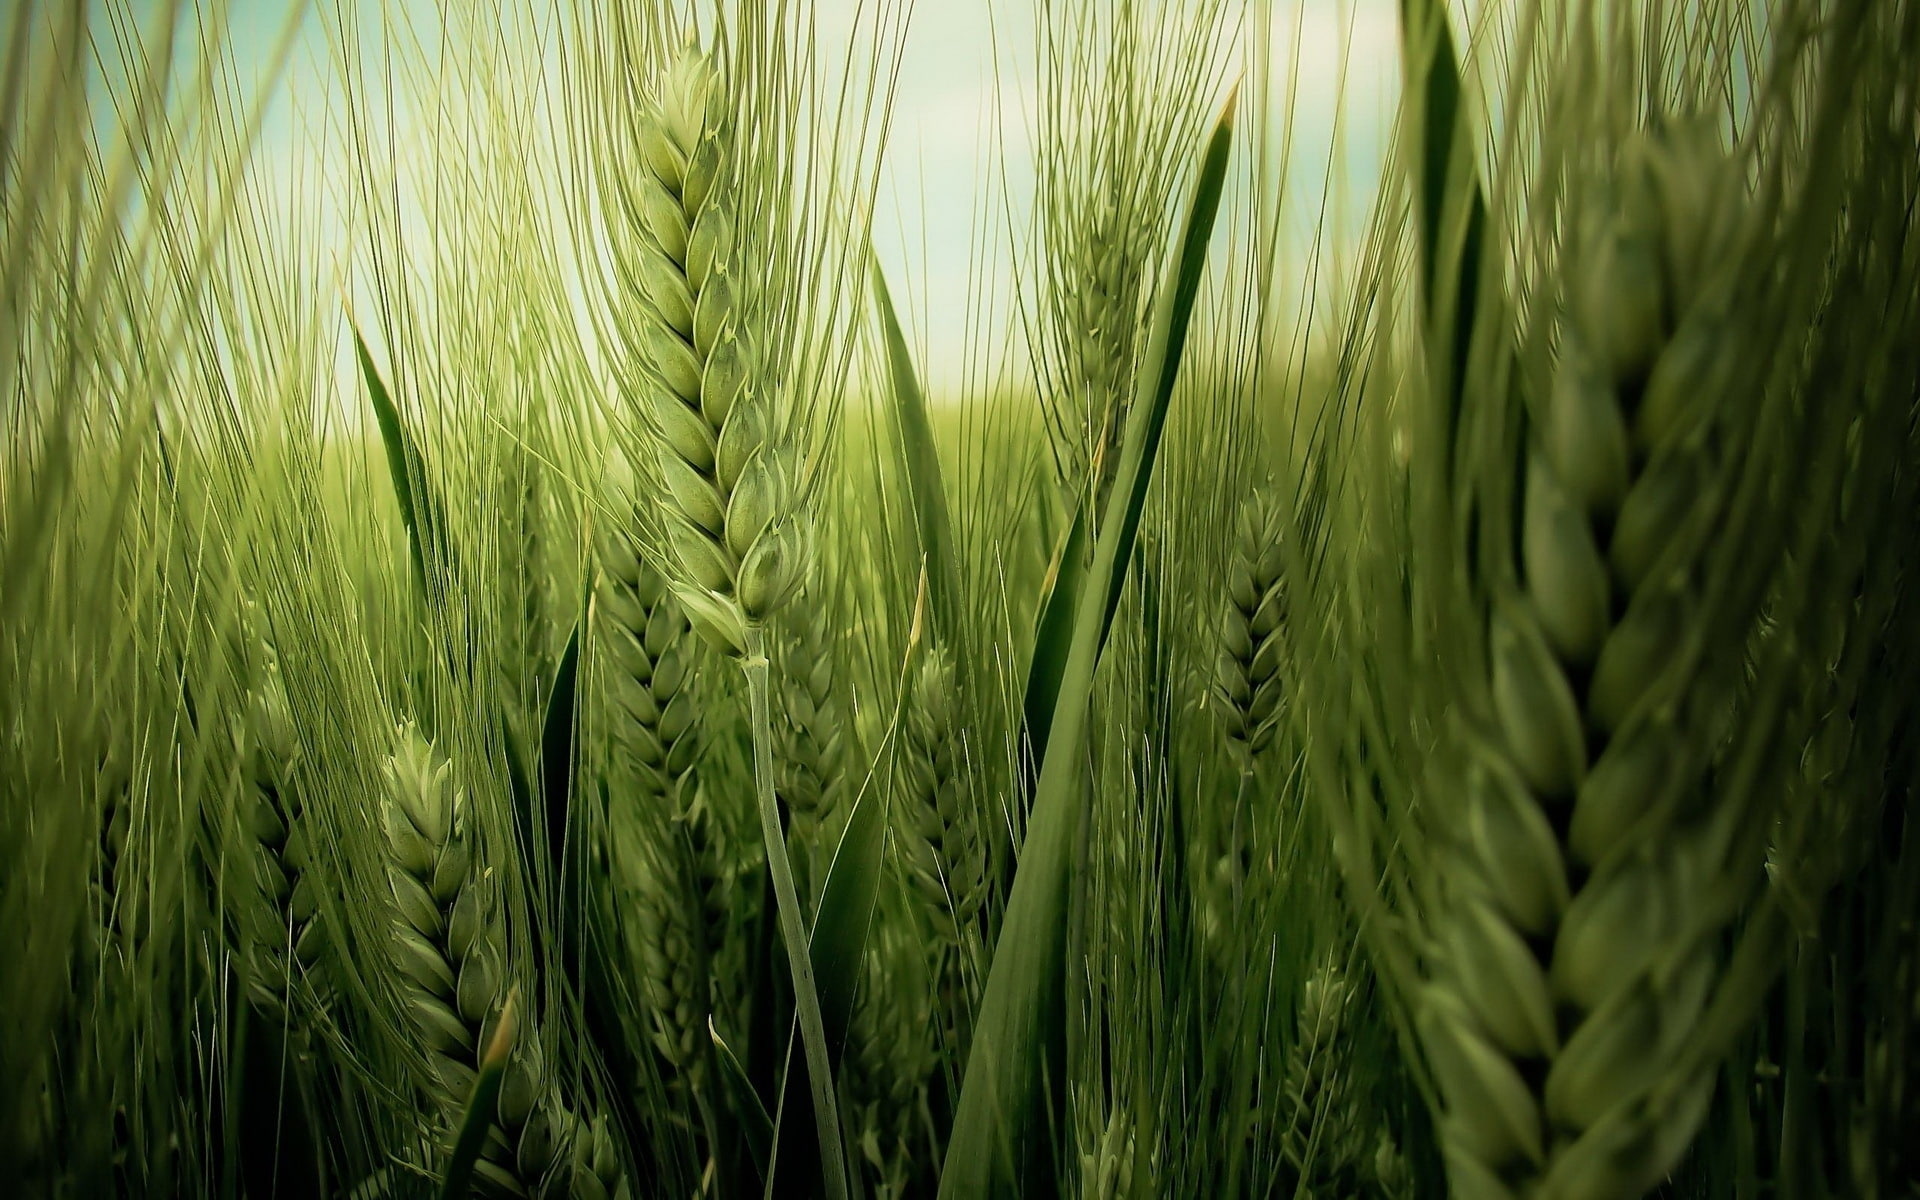 Green Wheat Field, nature